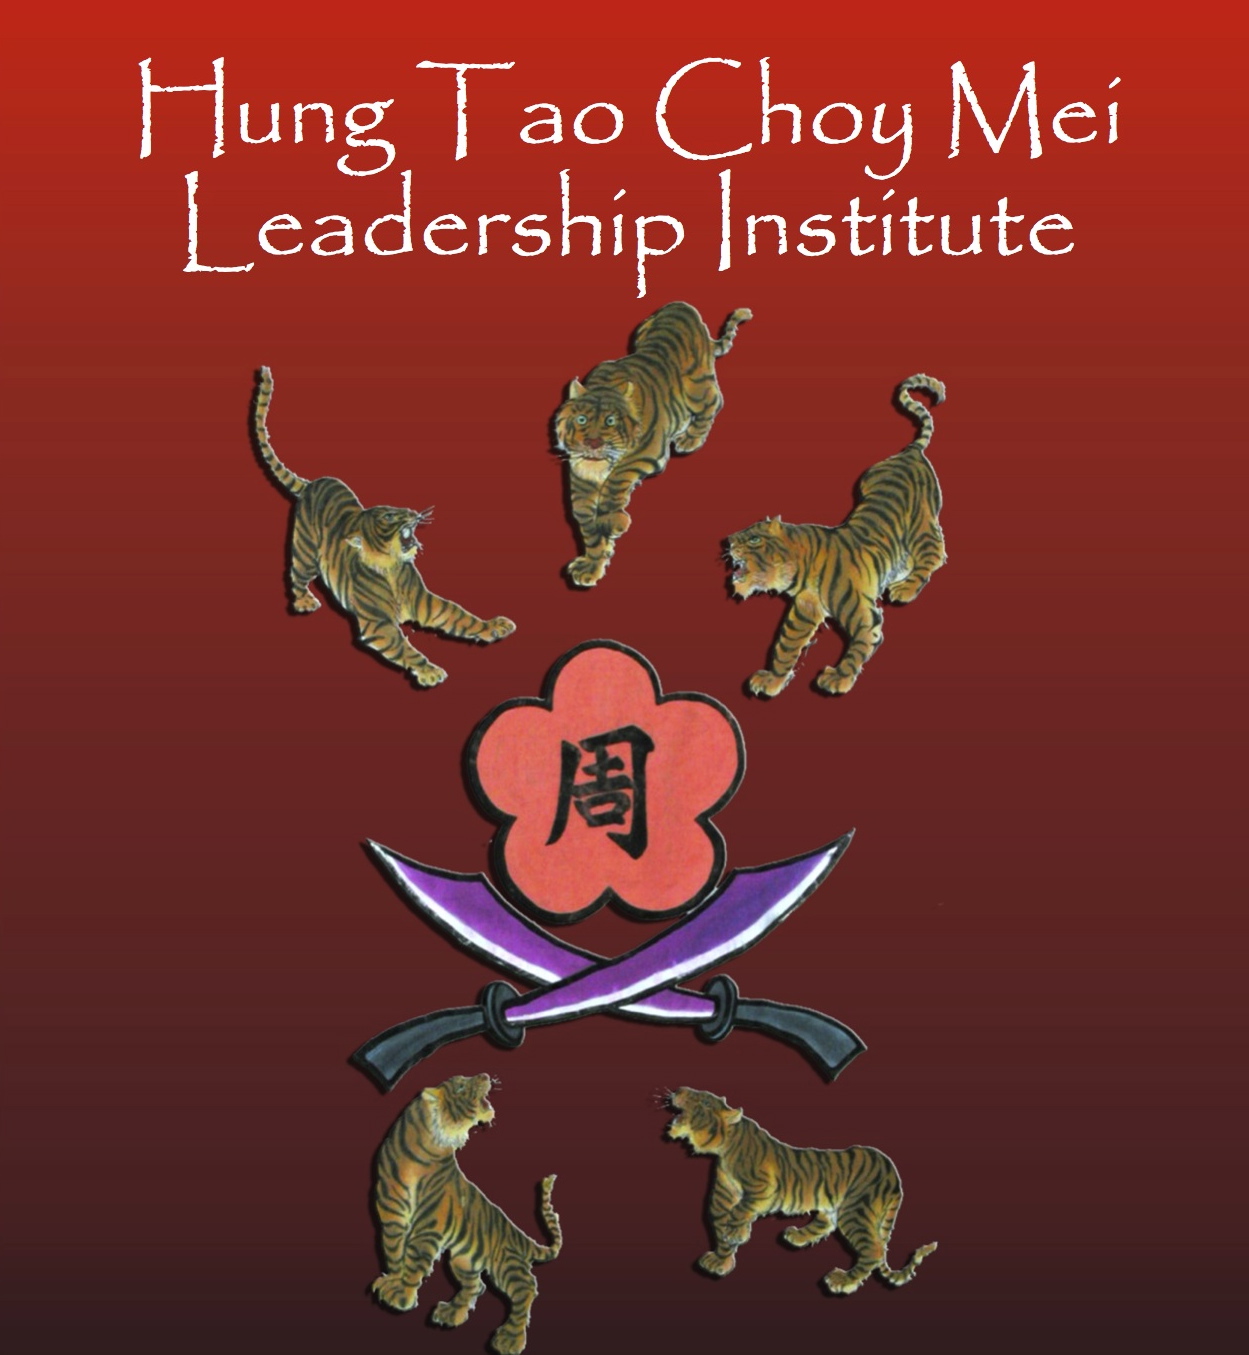 Hung Tao Choy Mei Leadership Institute logo